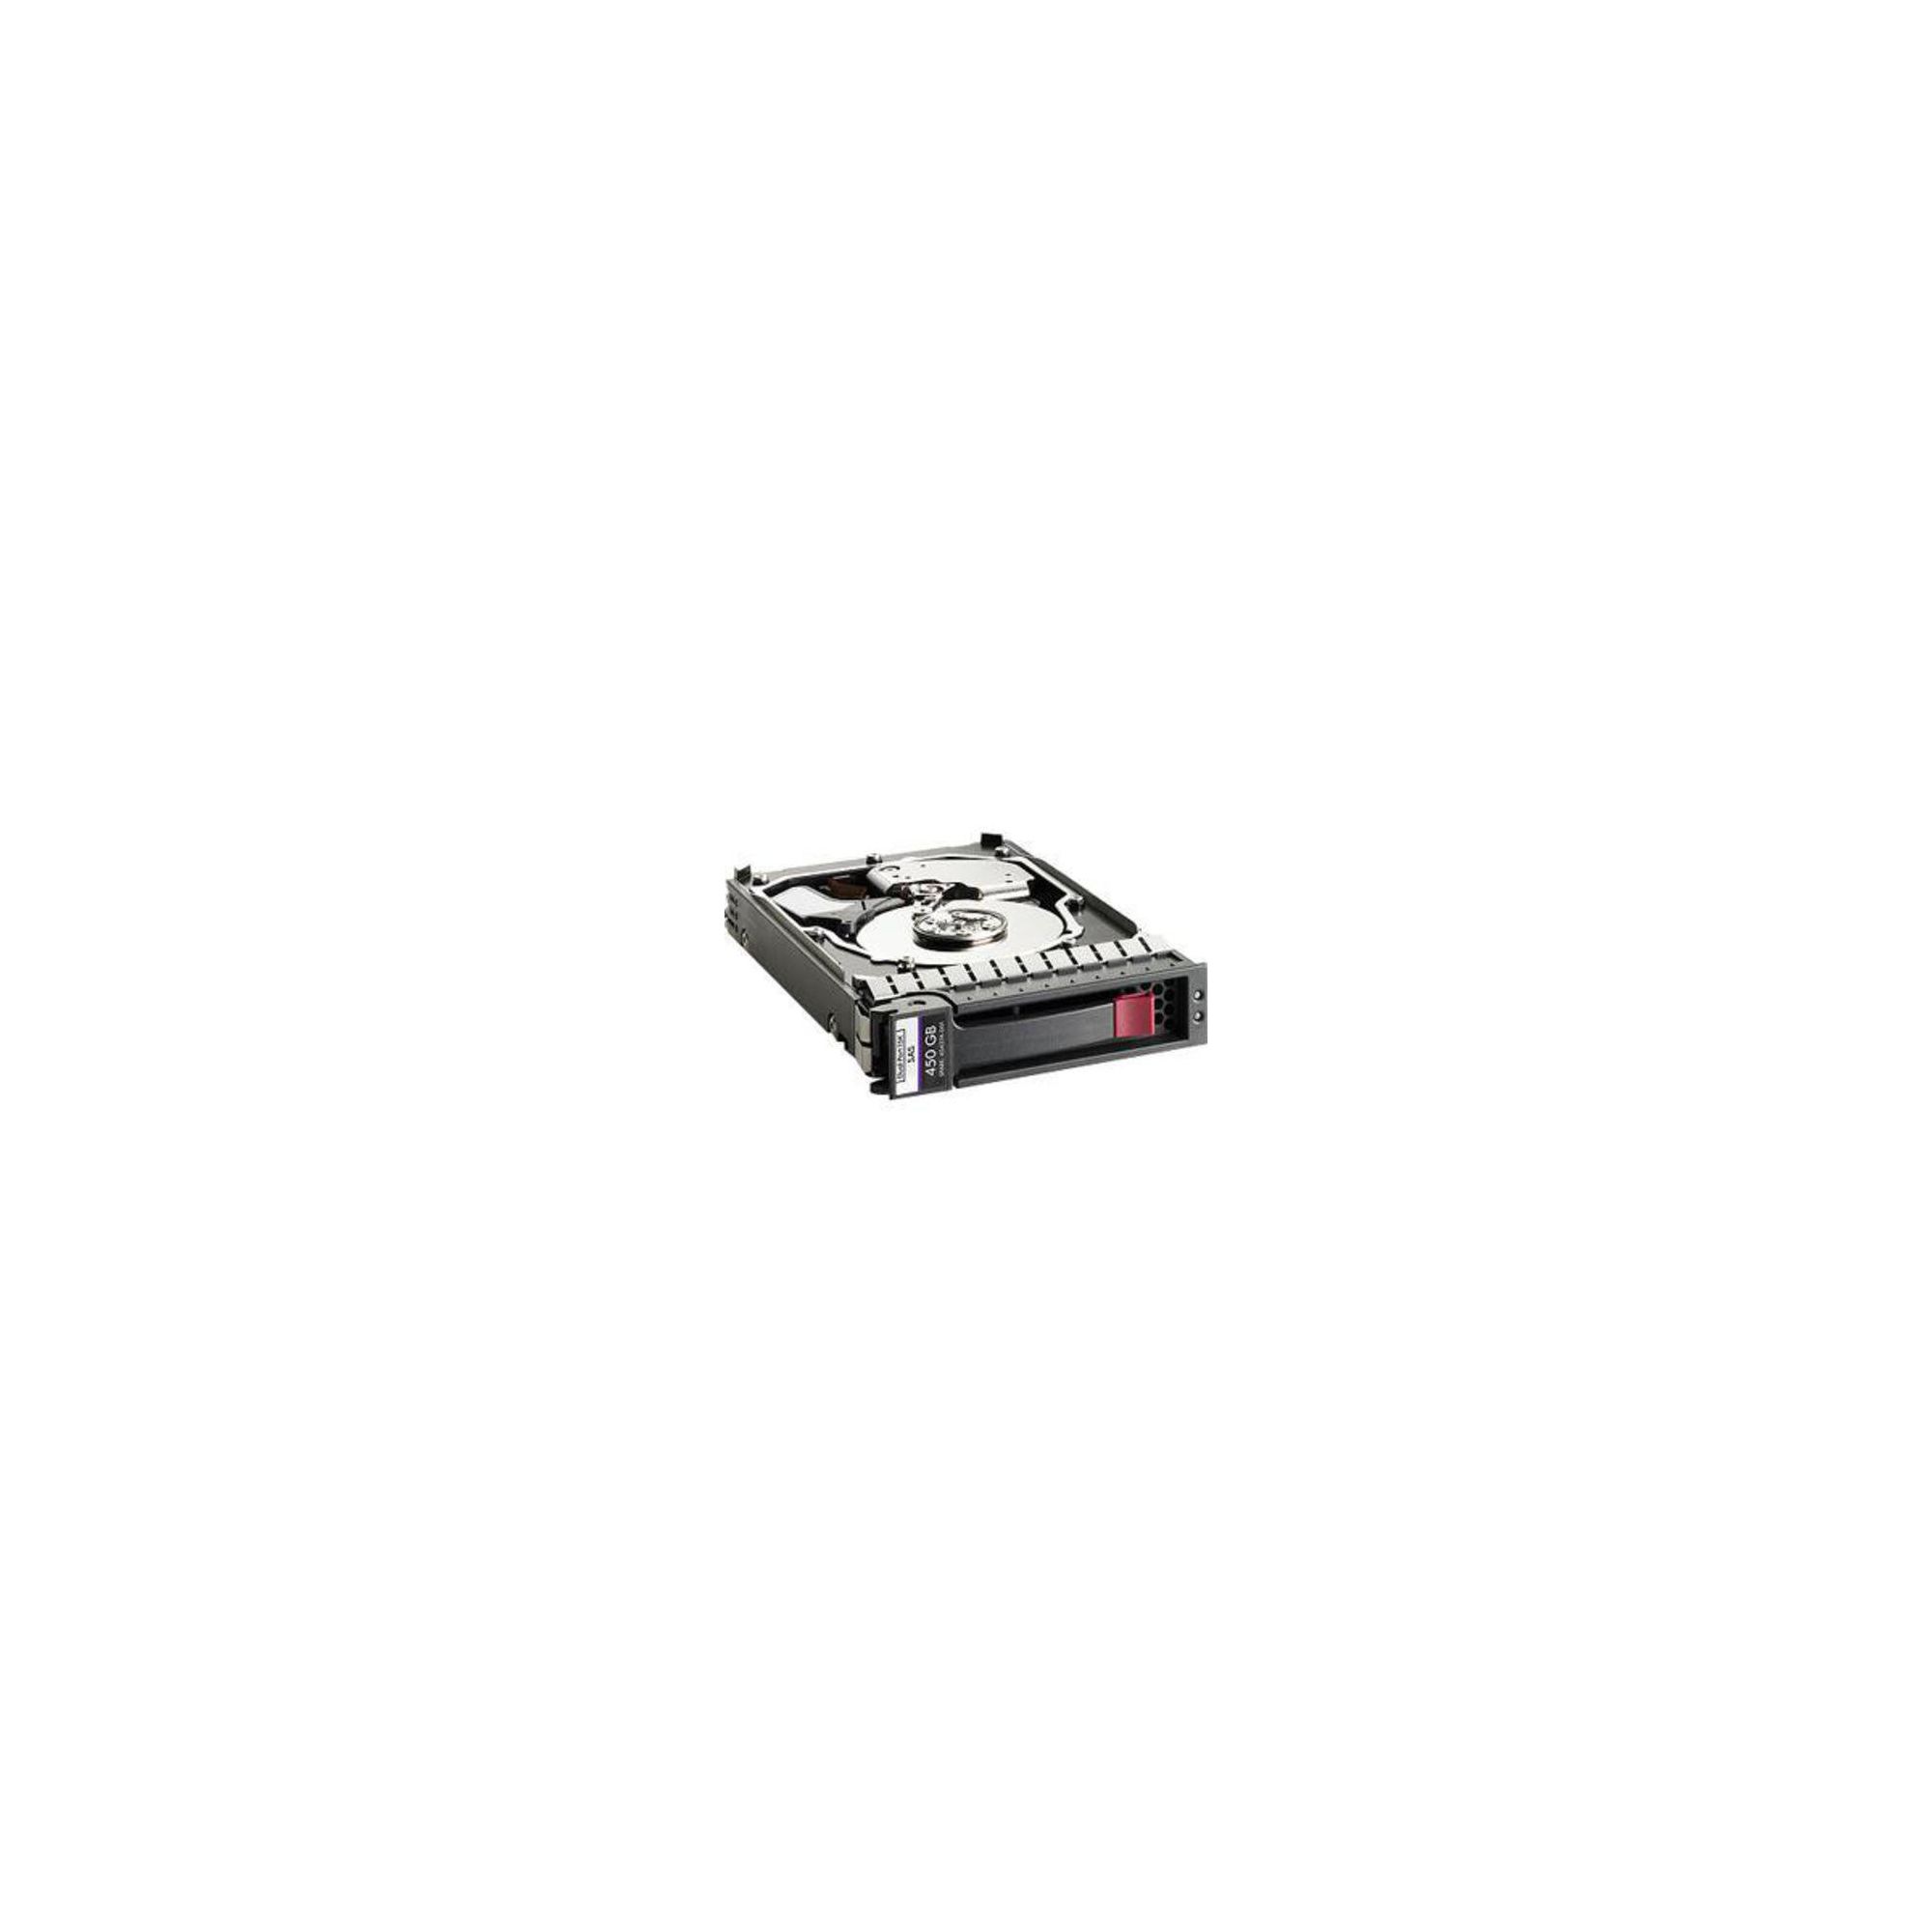 Hewlett-Packard P2000 450GB 6G SAS 15K rpm LFF Dual Port Enterprise Hard Drive at Tesco Direct